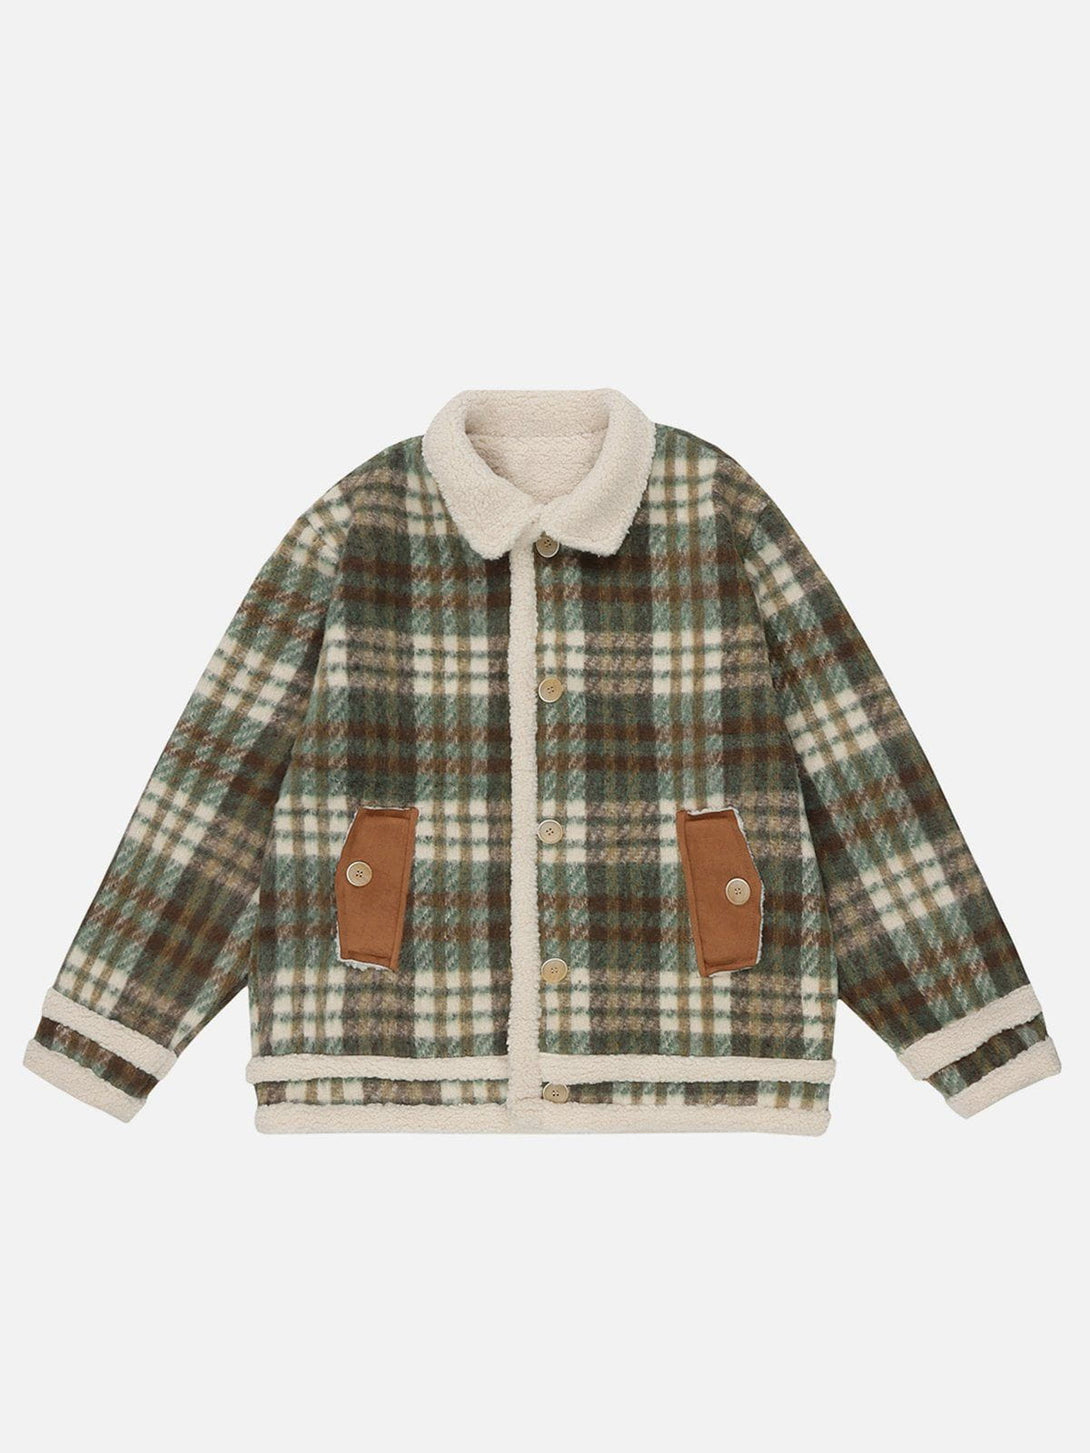 Levefly - Vintage Check Sherpa Coat - Streetwear Fashion - levefly.com